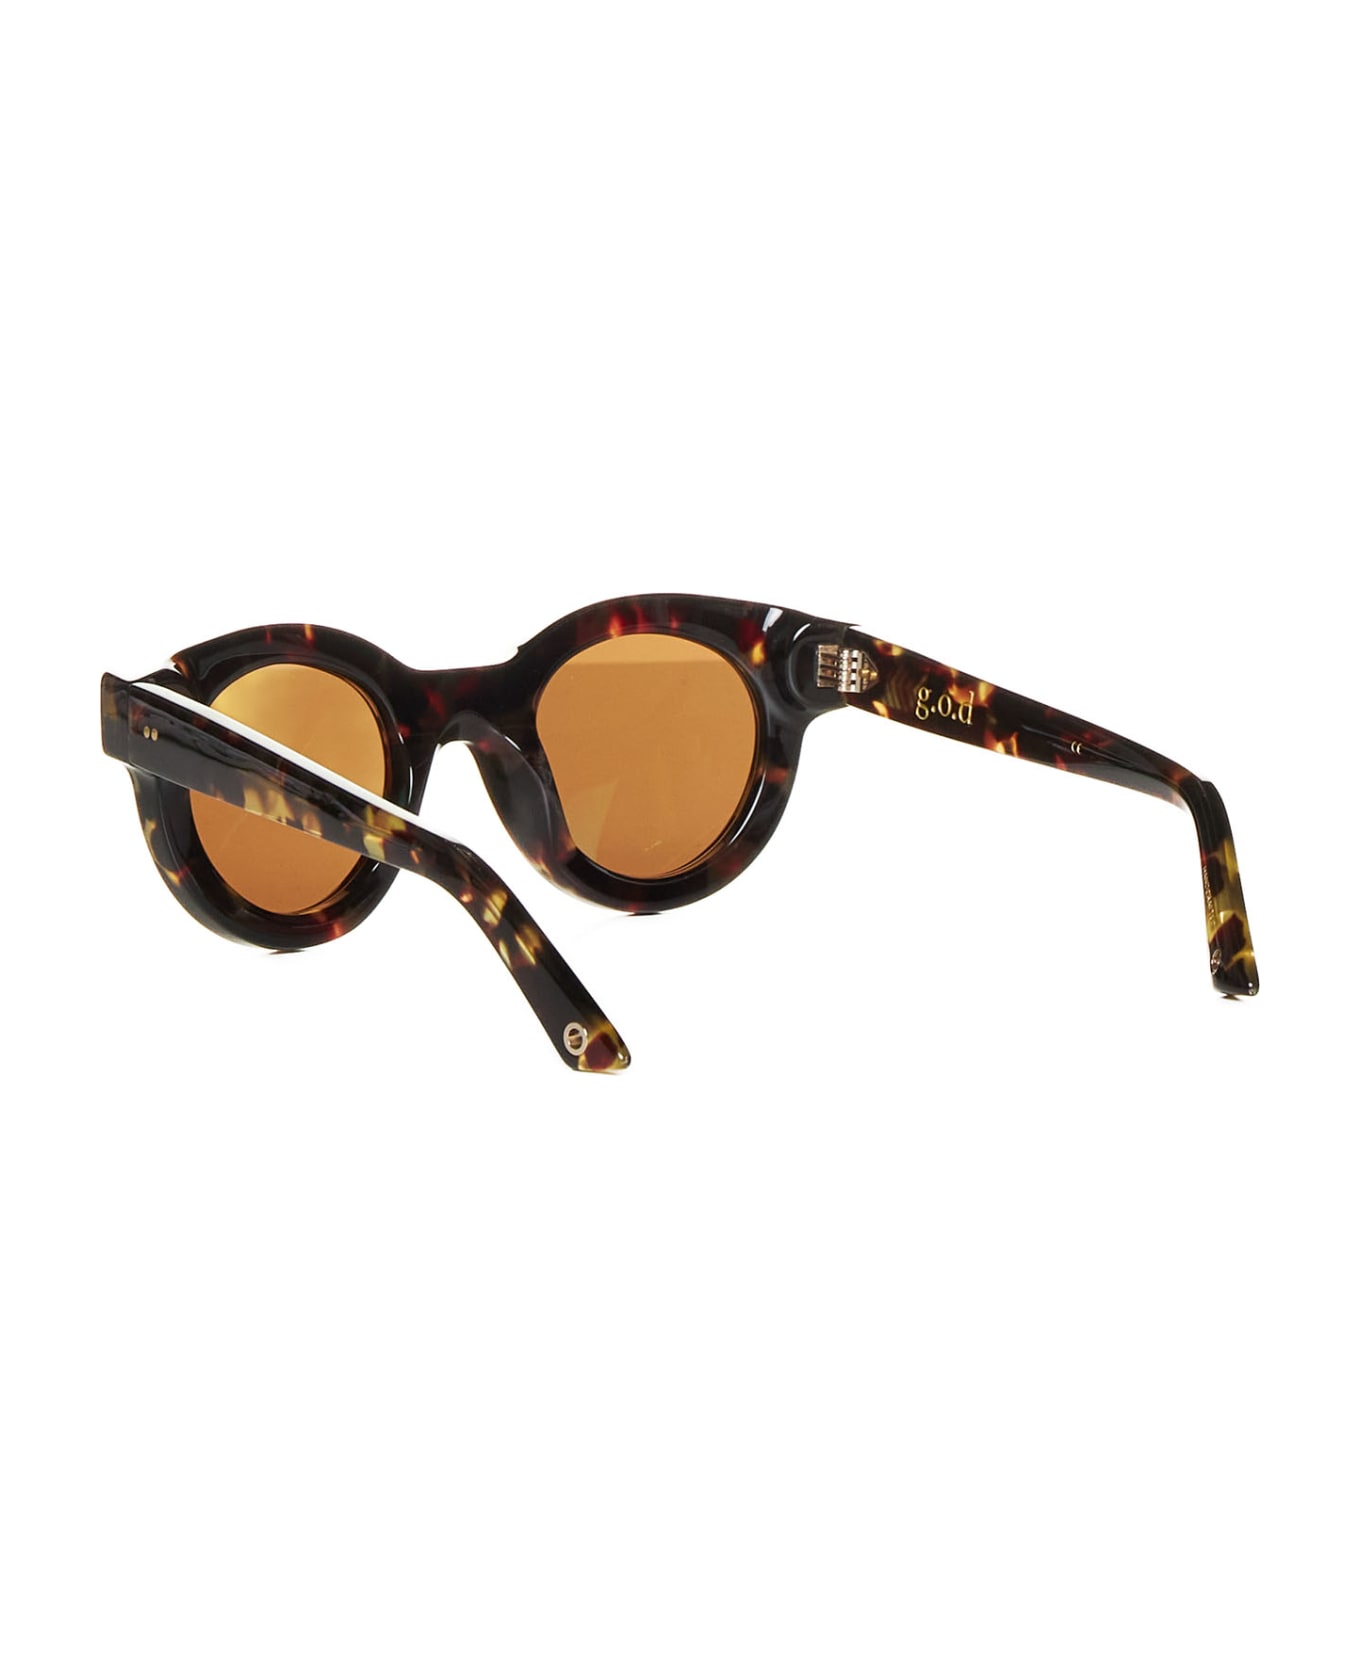 g.o.d Sunglasses - Yellow tortoise w brown lens